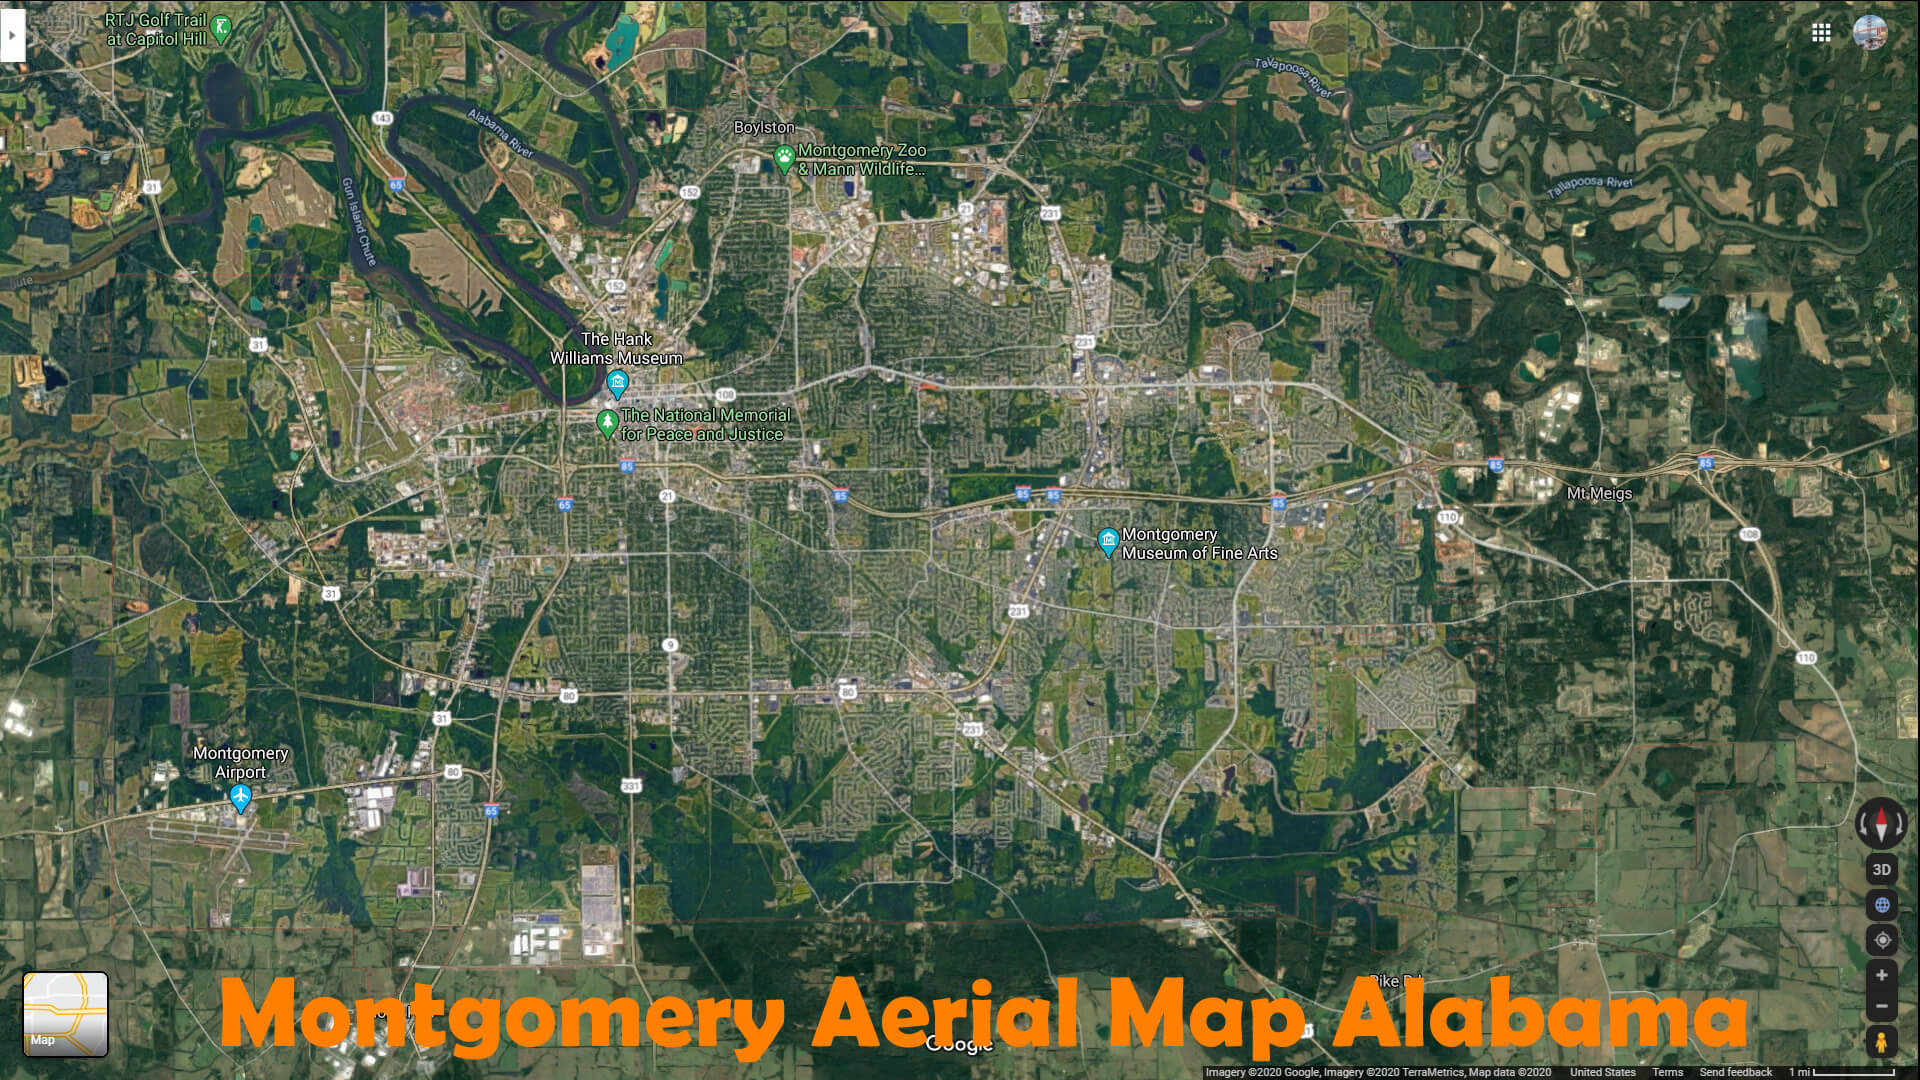 Montgomery Aerial Map Alabama